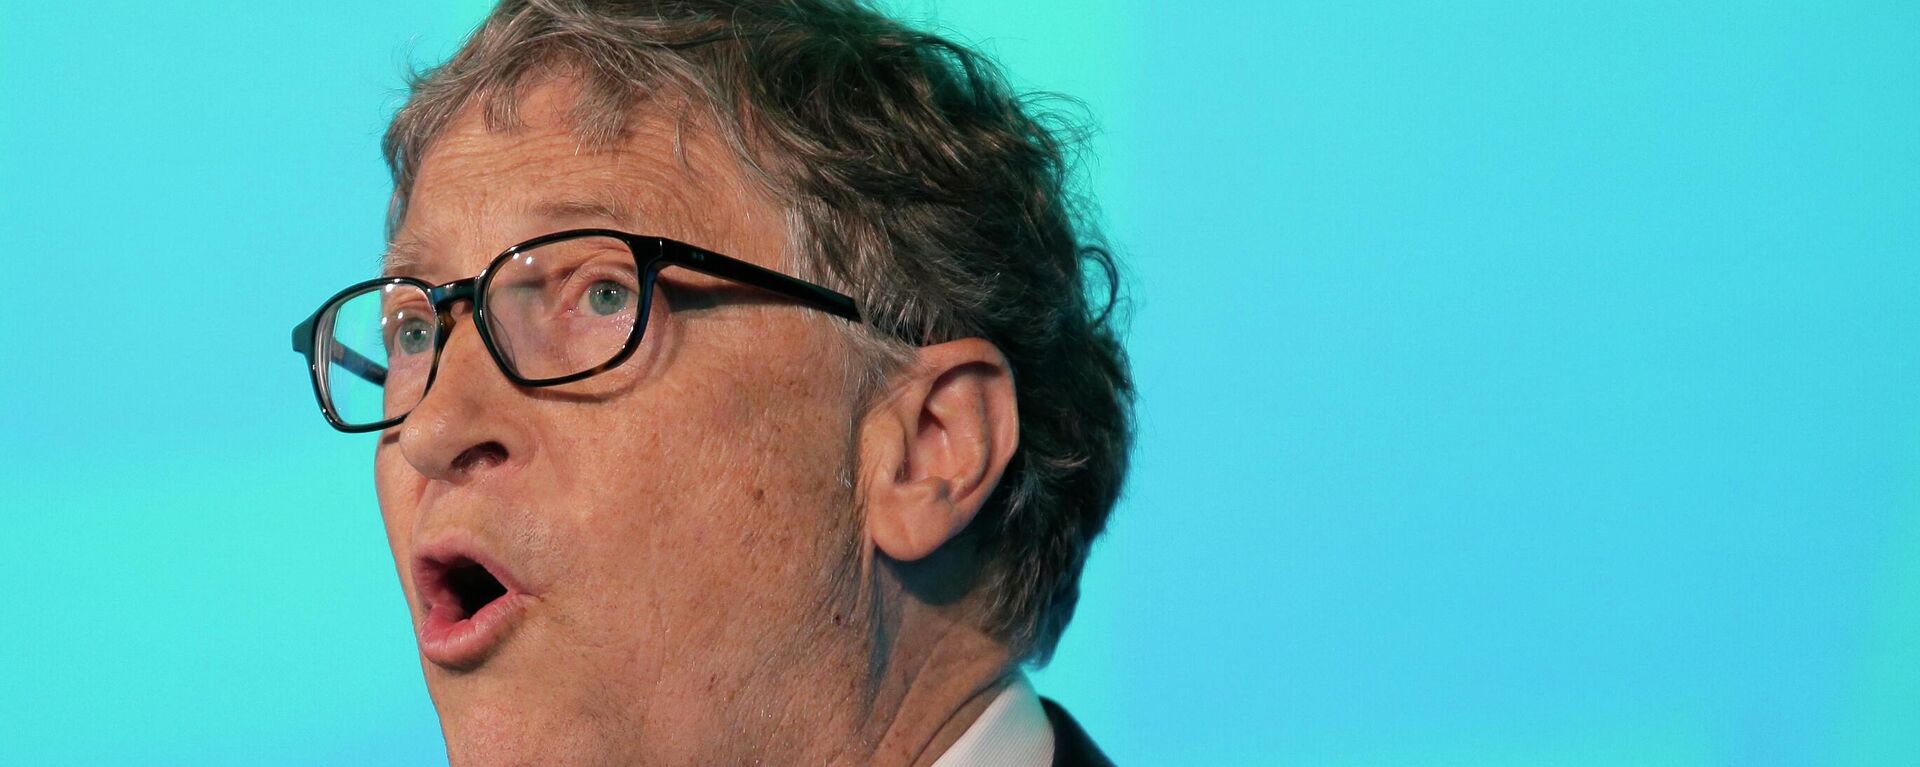 Bill Gates, cofundador de Microsoft - Sputnik Mundo, 1920, 20.10.2021